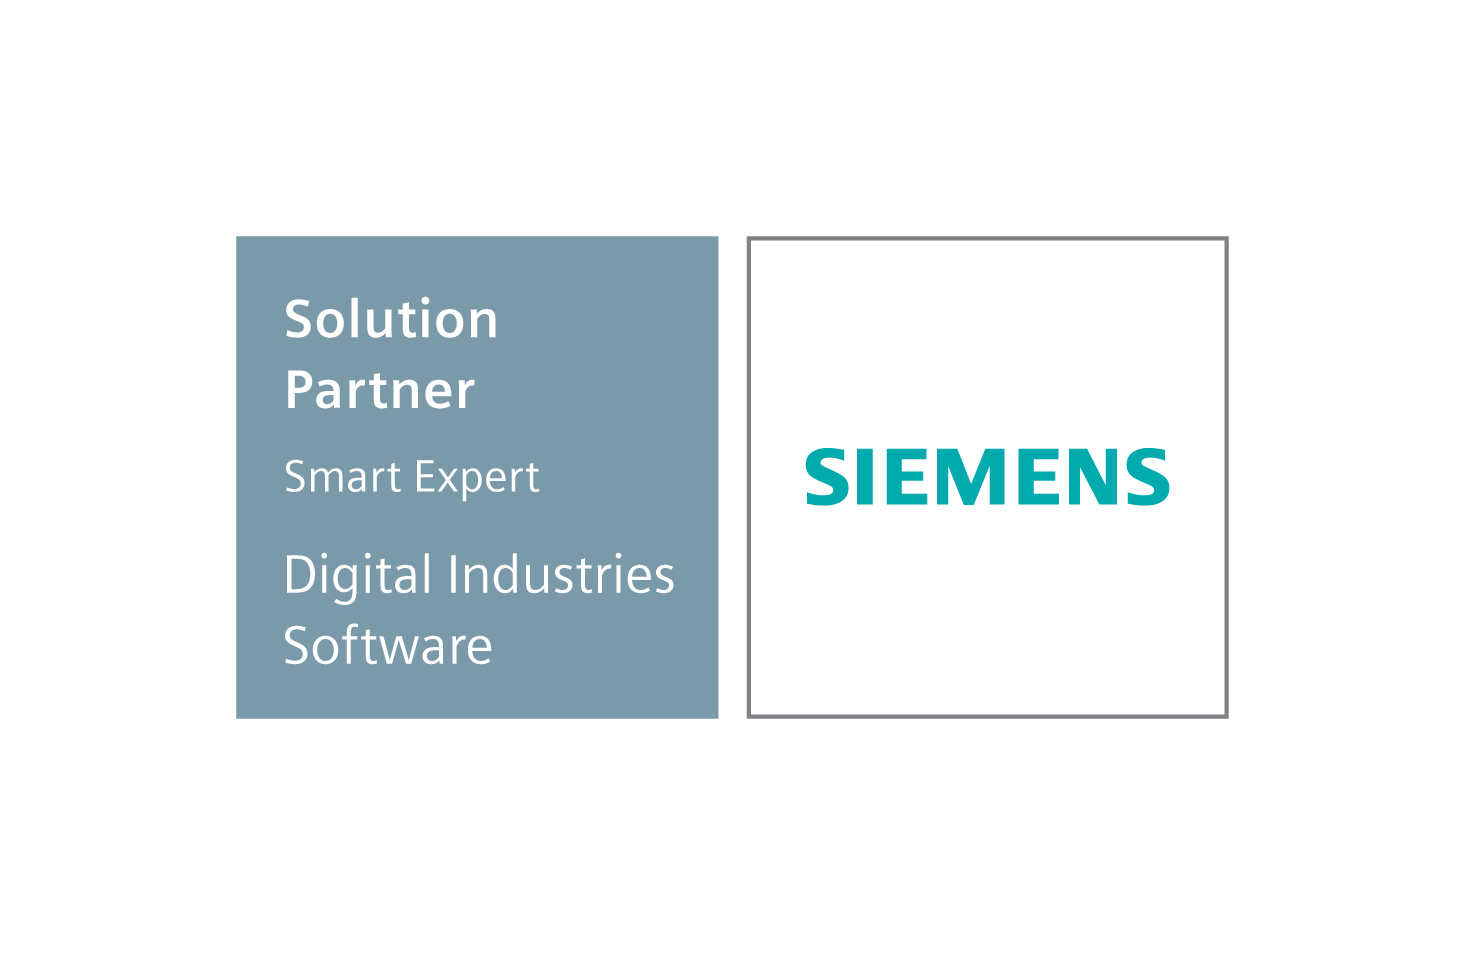 Siemens-SW-Solution-Partner-Smart-Expert-Emblem-Horizontal.gif - 22.17 kB